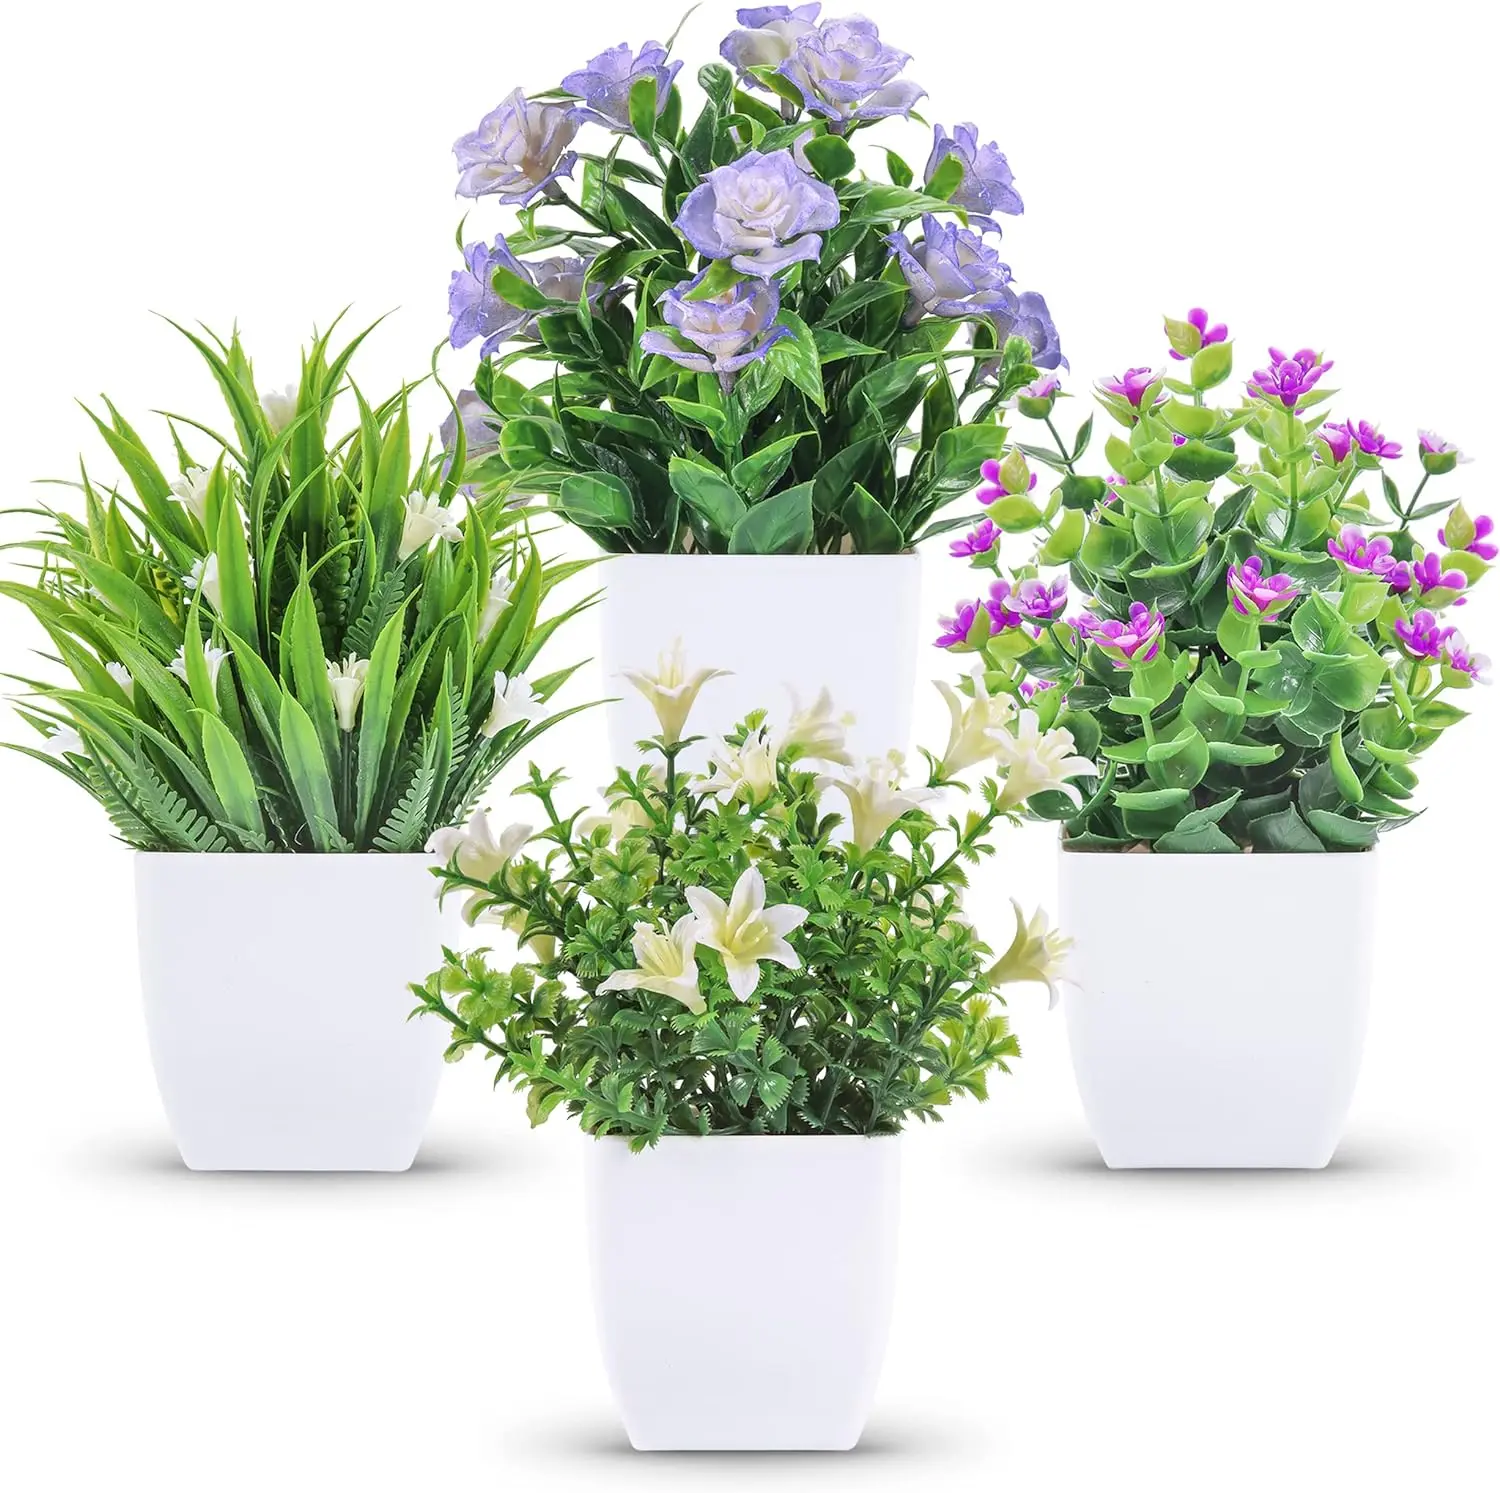 

4 Packs Small Simulation Plants Mini Simulation Flowers For Living Room Bathroom Study Room Desk Decoration